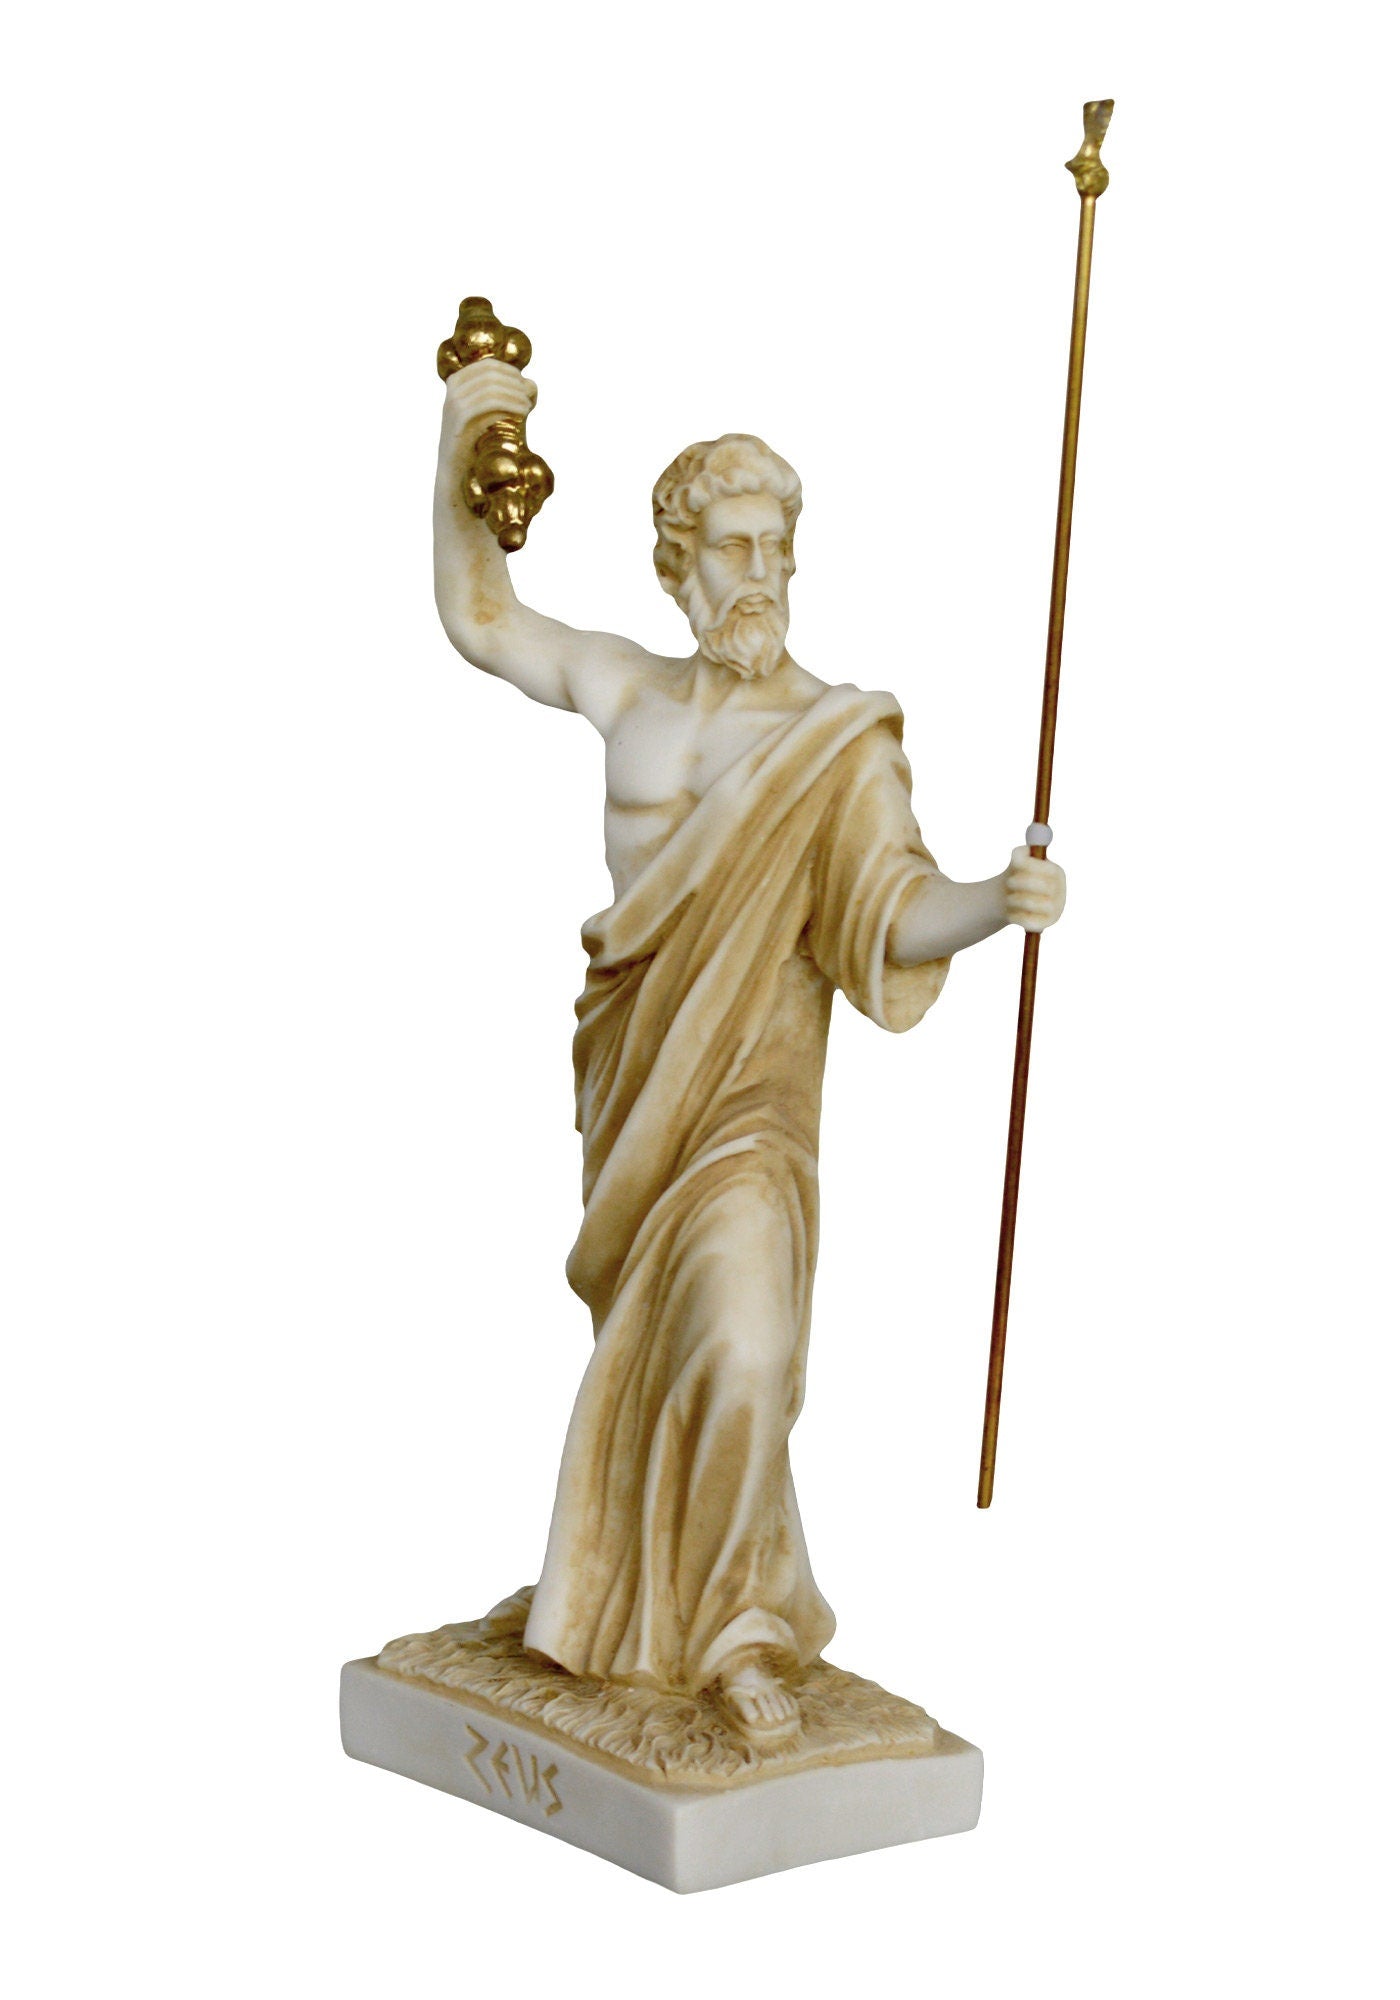 Zeus Jupiter - Greek Roman King of all Gods of Mount Olympus - Ruler of Sky, Lightning and Thunder - Aged Alabaster Statue